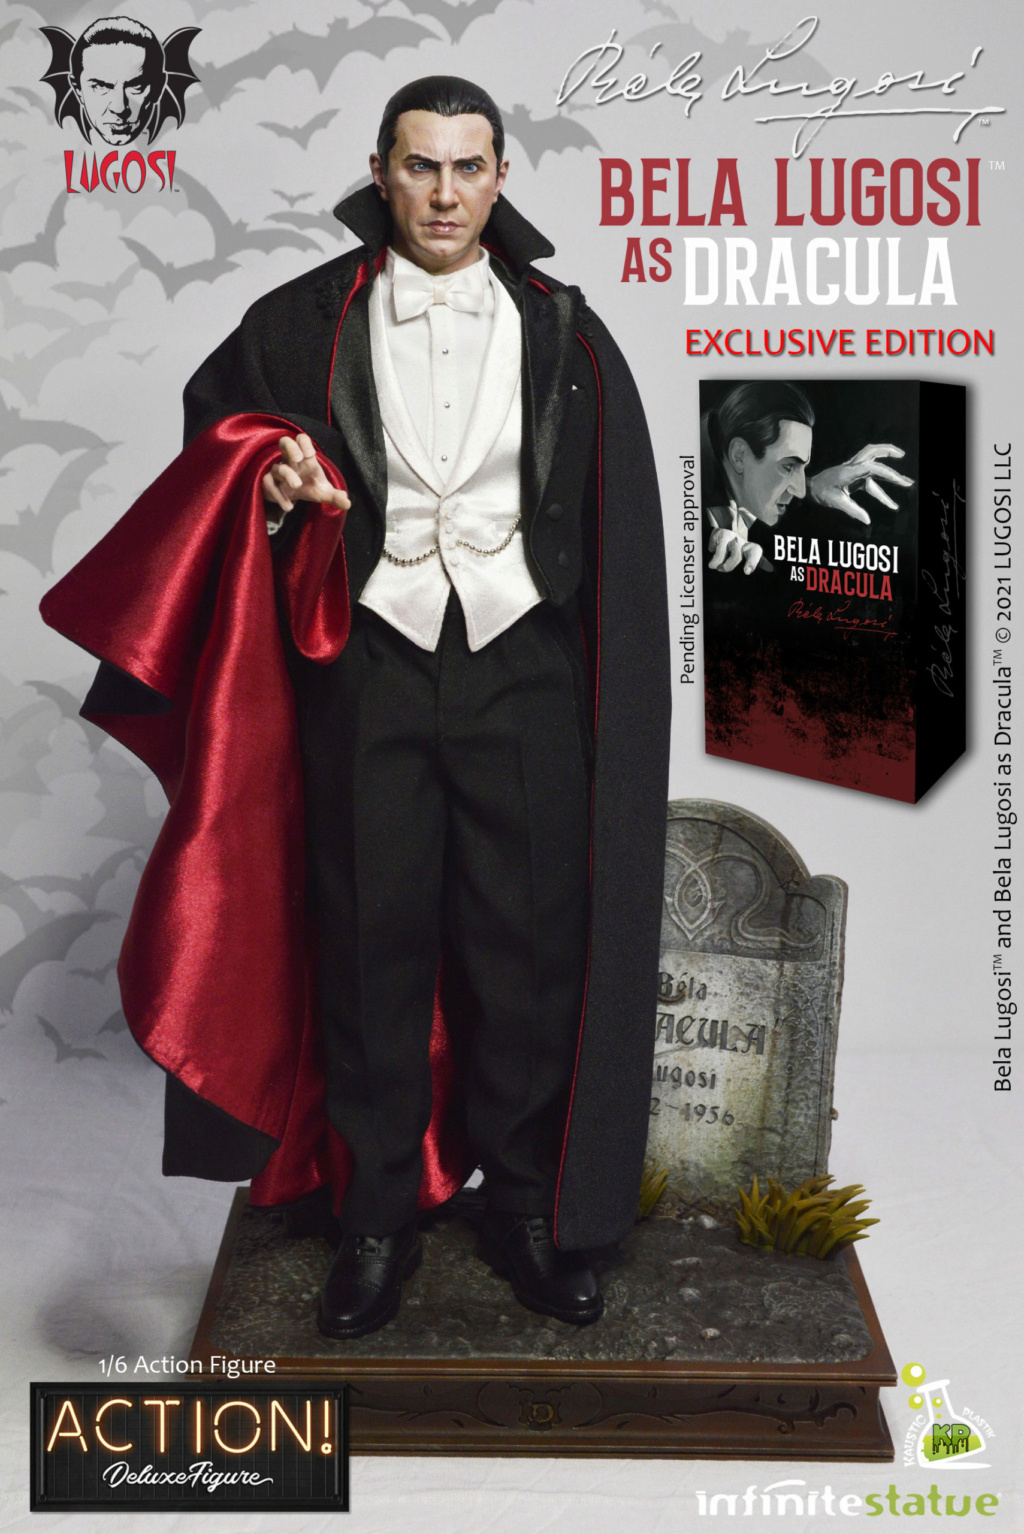 NEW PRODUCT: Kaustic Plastik & Infinite Statue: Bela Lugosi as Dracula (standard, deluxe & exclusive) action figure 2894